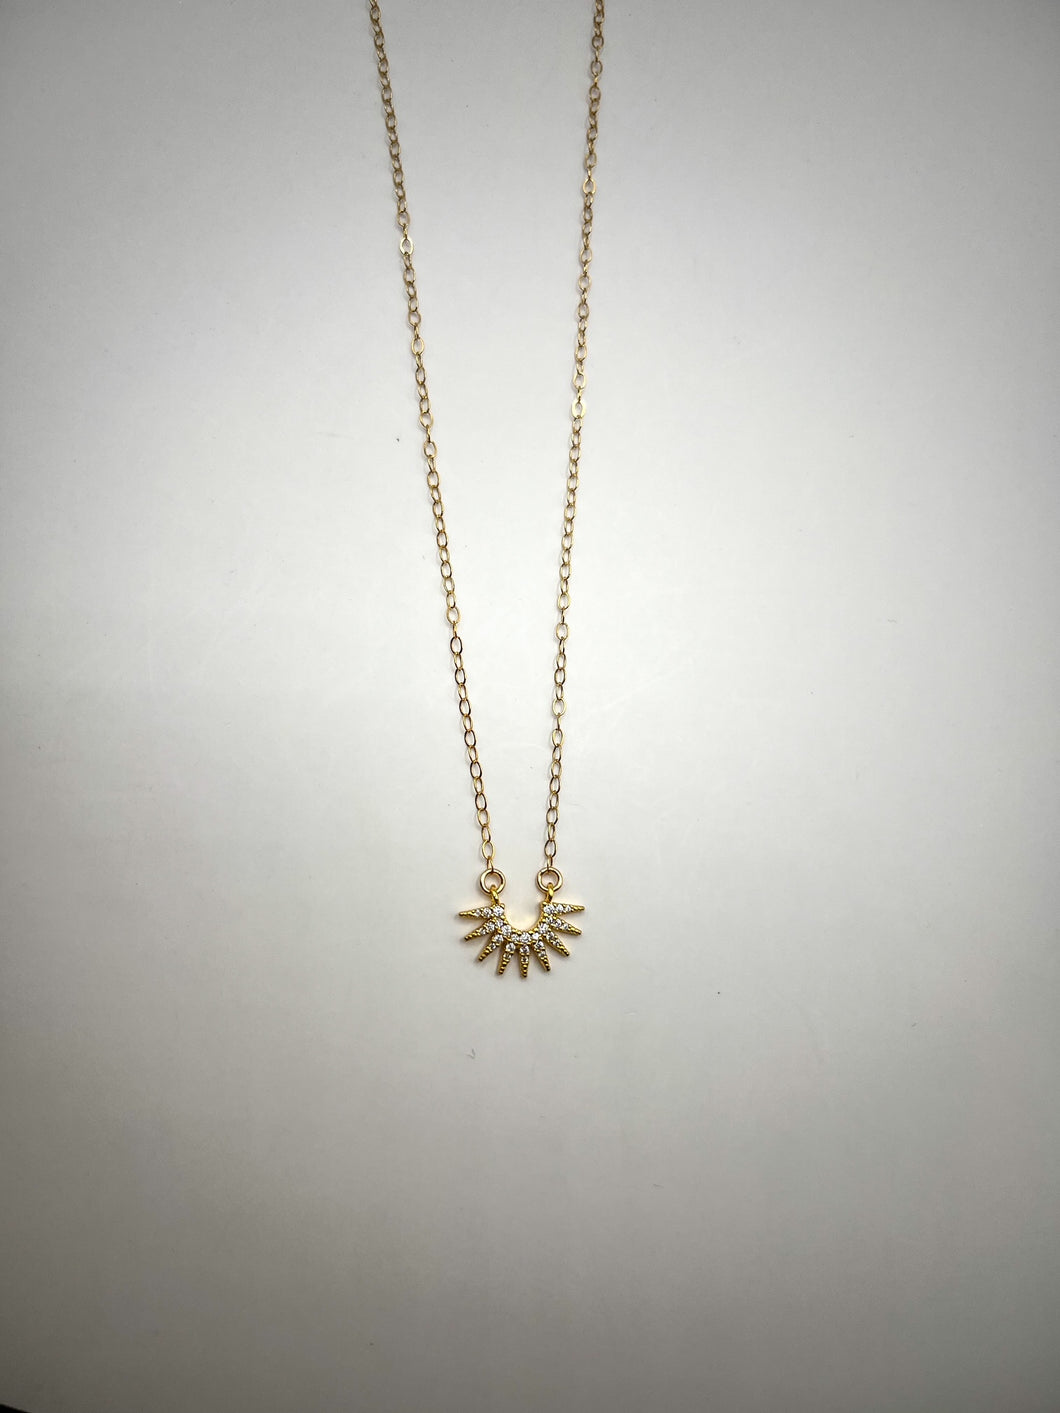 CZ Sunburst Necklace - Gold Filled